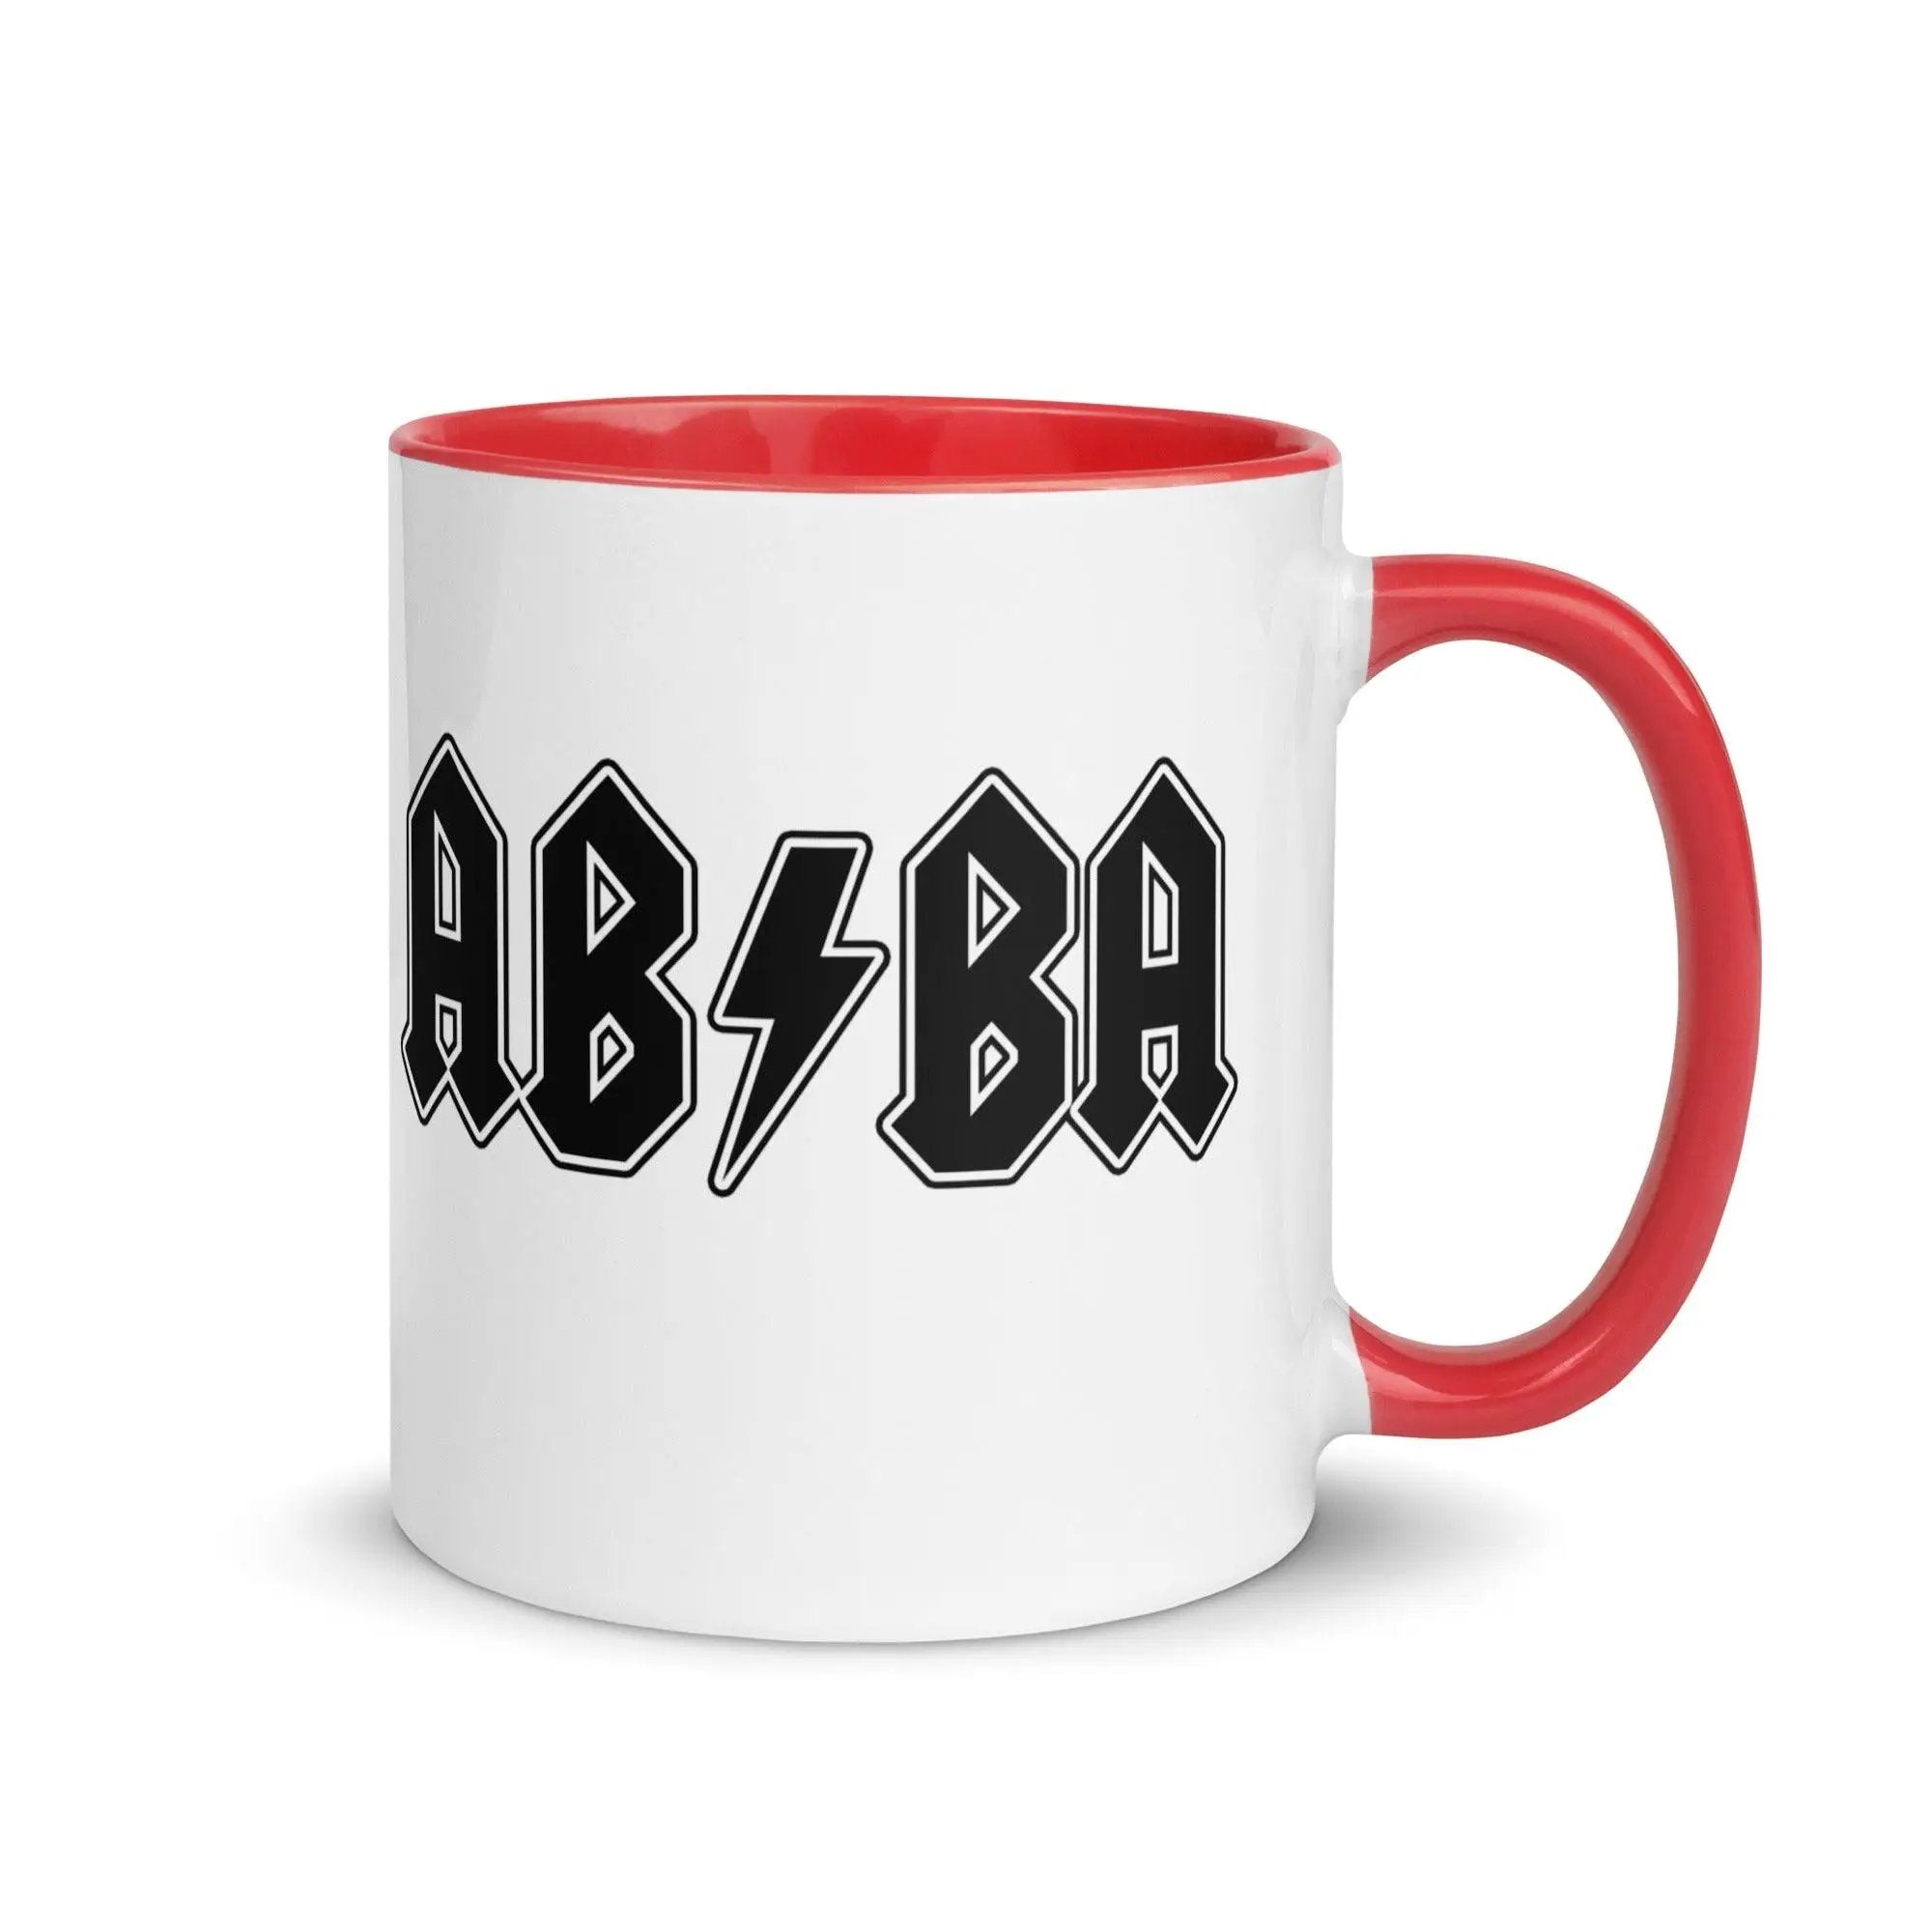 AB/BA Mug with Color Inside